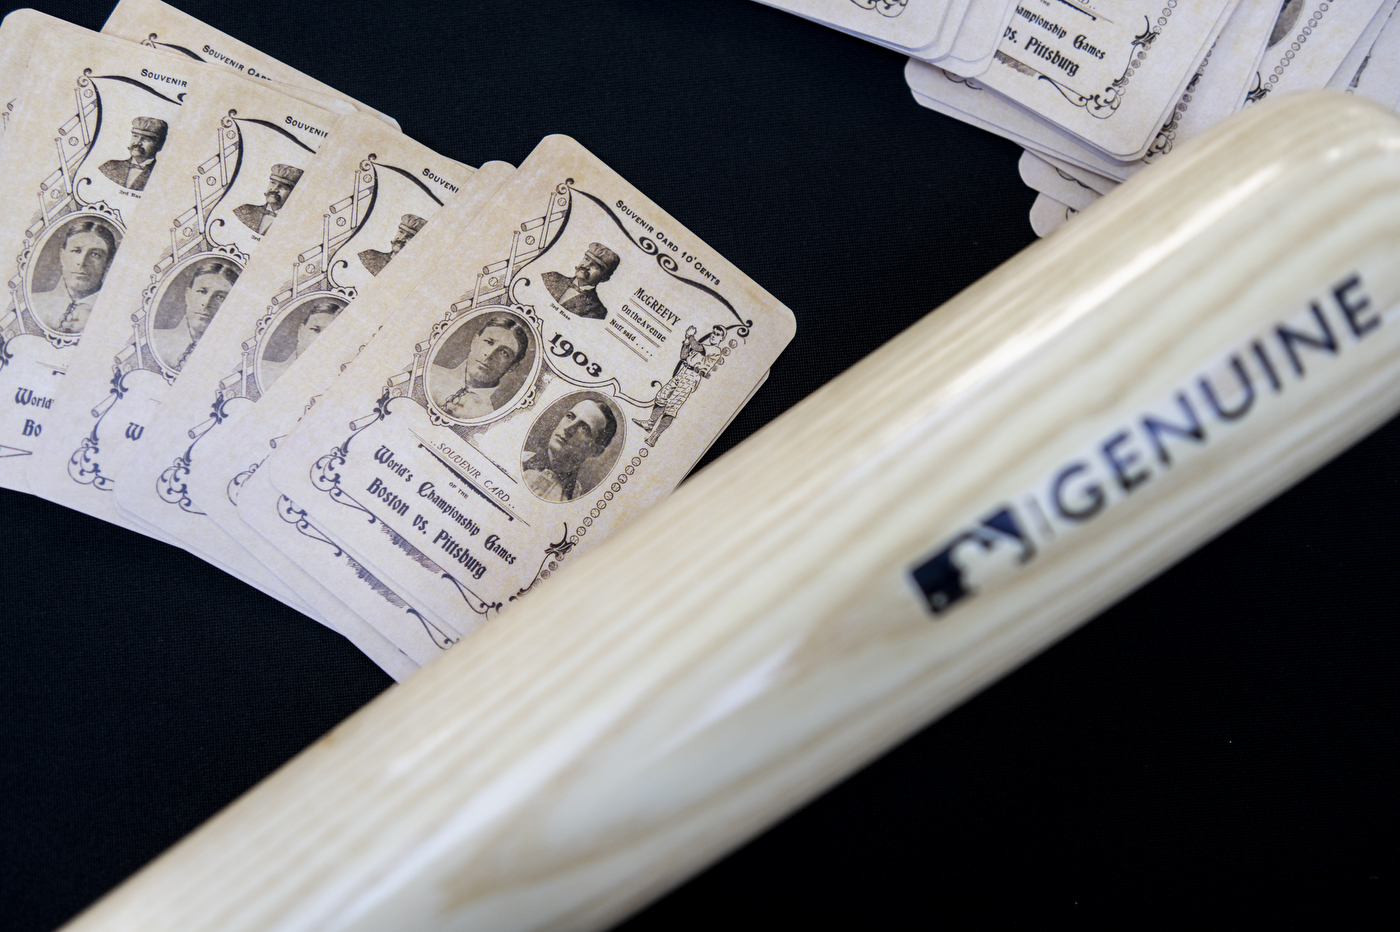 Baseball bat and historic souvenir cards that read "World's Championship Games Boston vs Pittsburg" on them